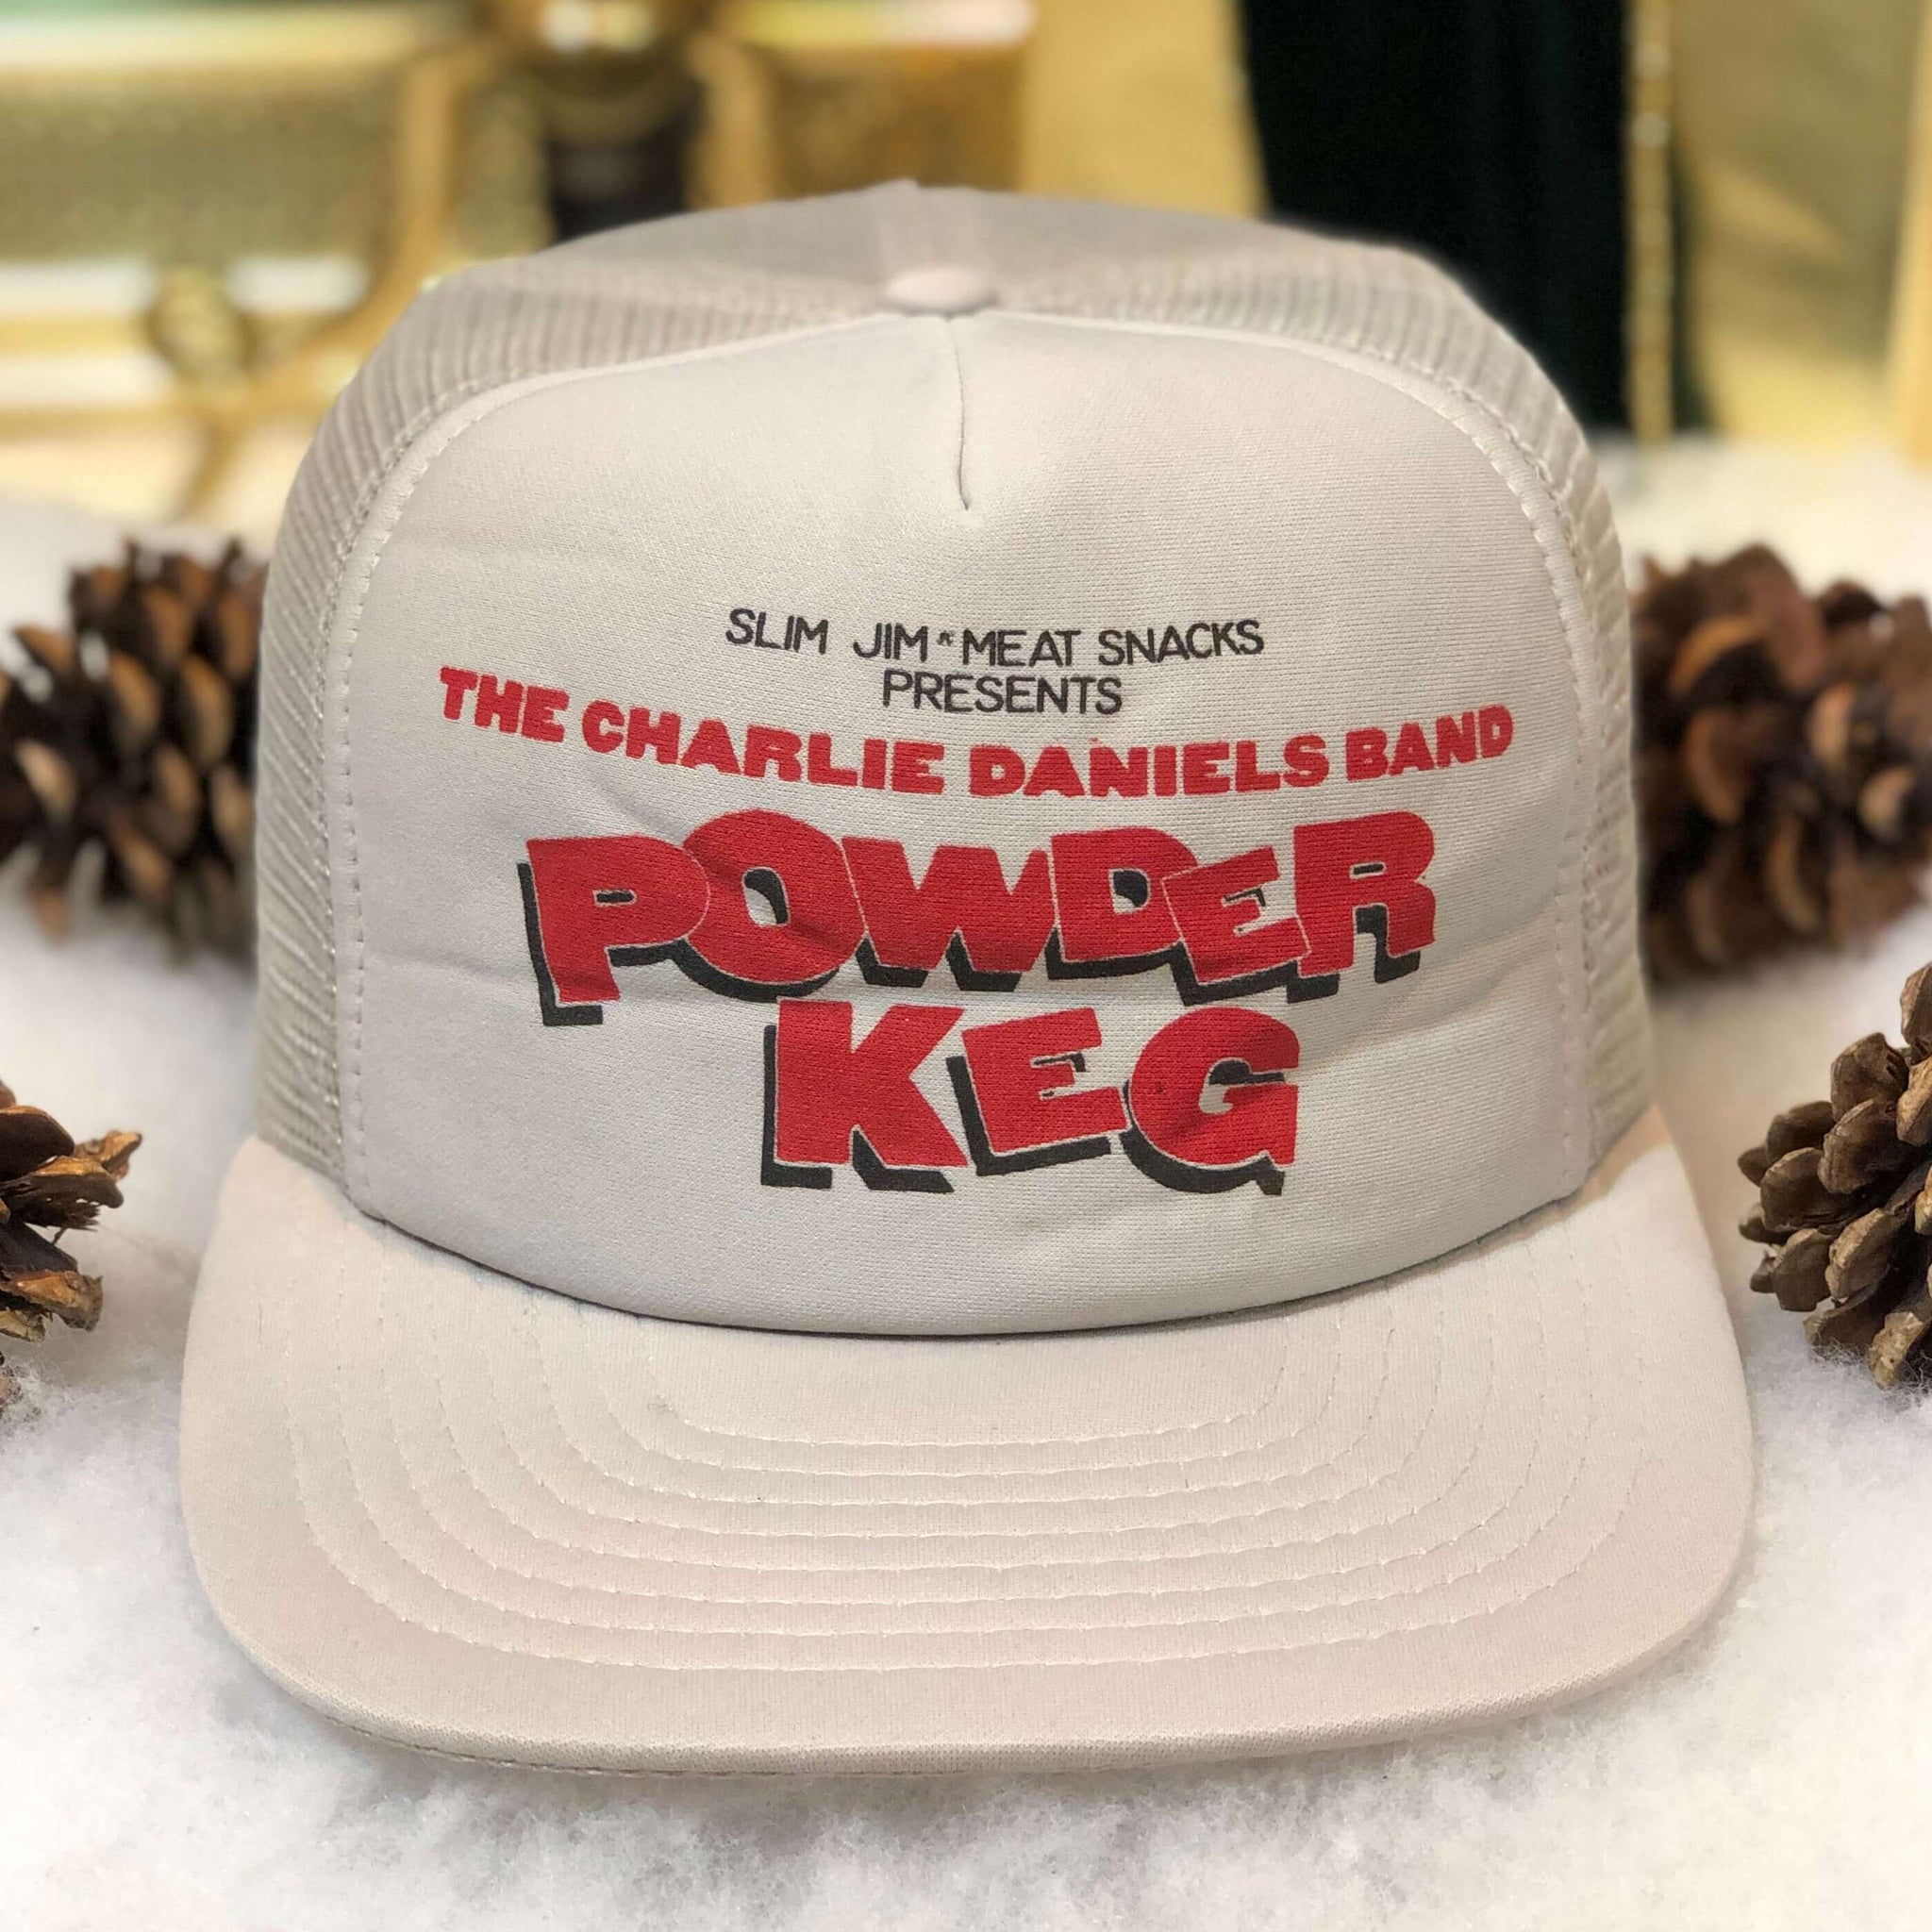 Vintage The Charlie Daniels Band Powder Keg Slim Jim Trucker Hat